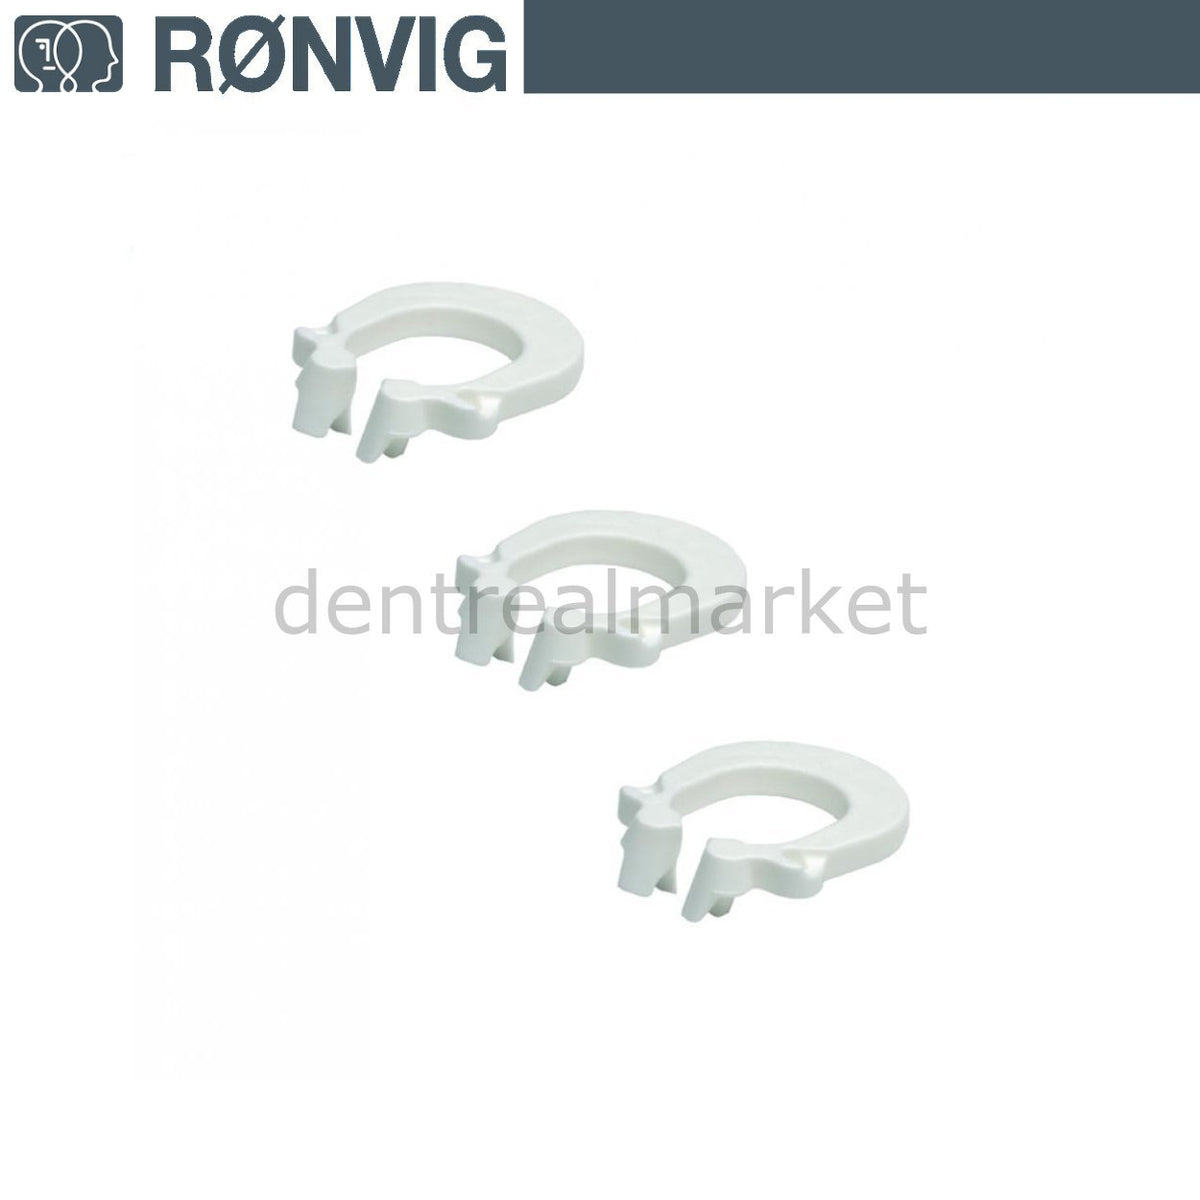 DentrealStore - Ronvig Flexi Ring Clamp Matrix Holder 25 Pcs